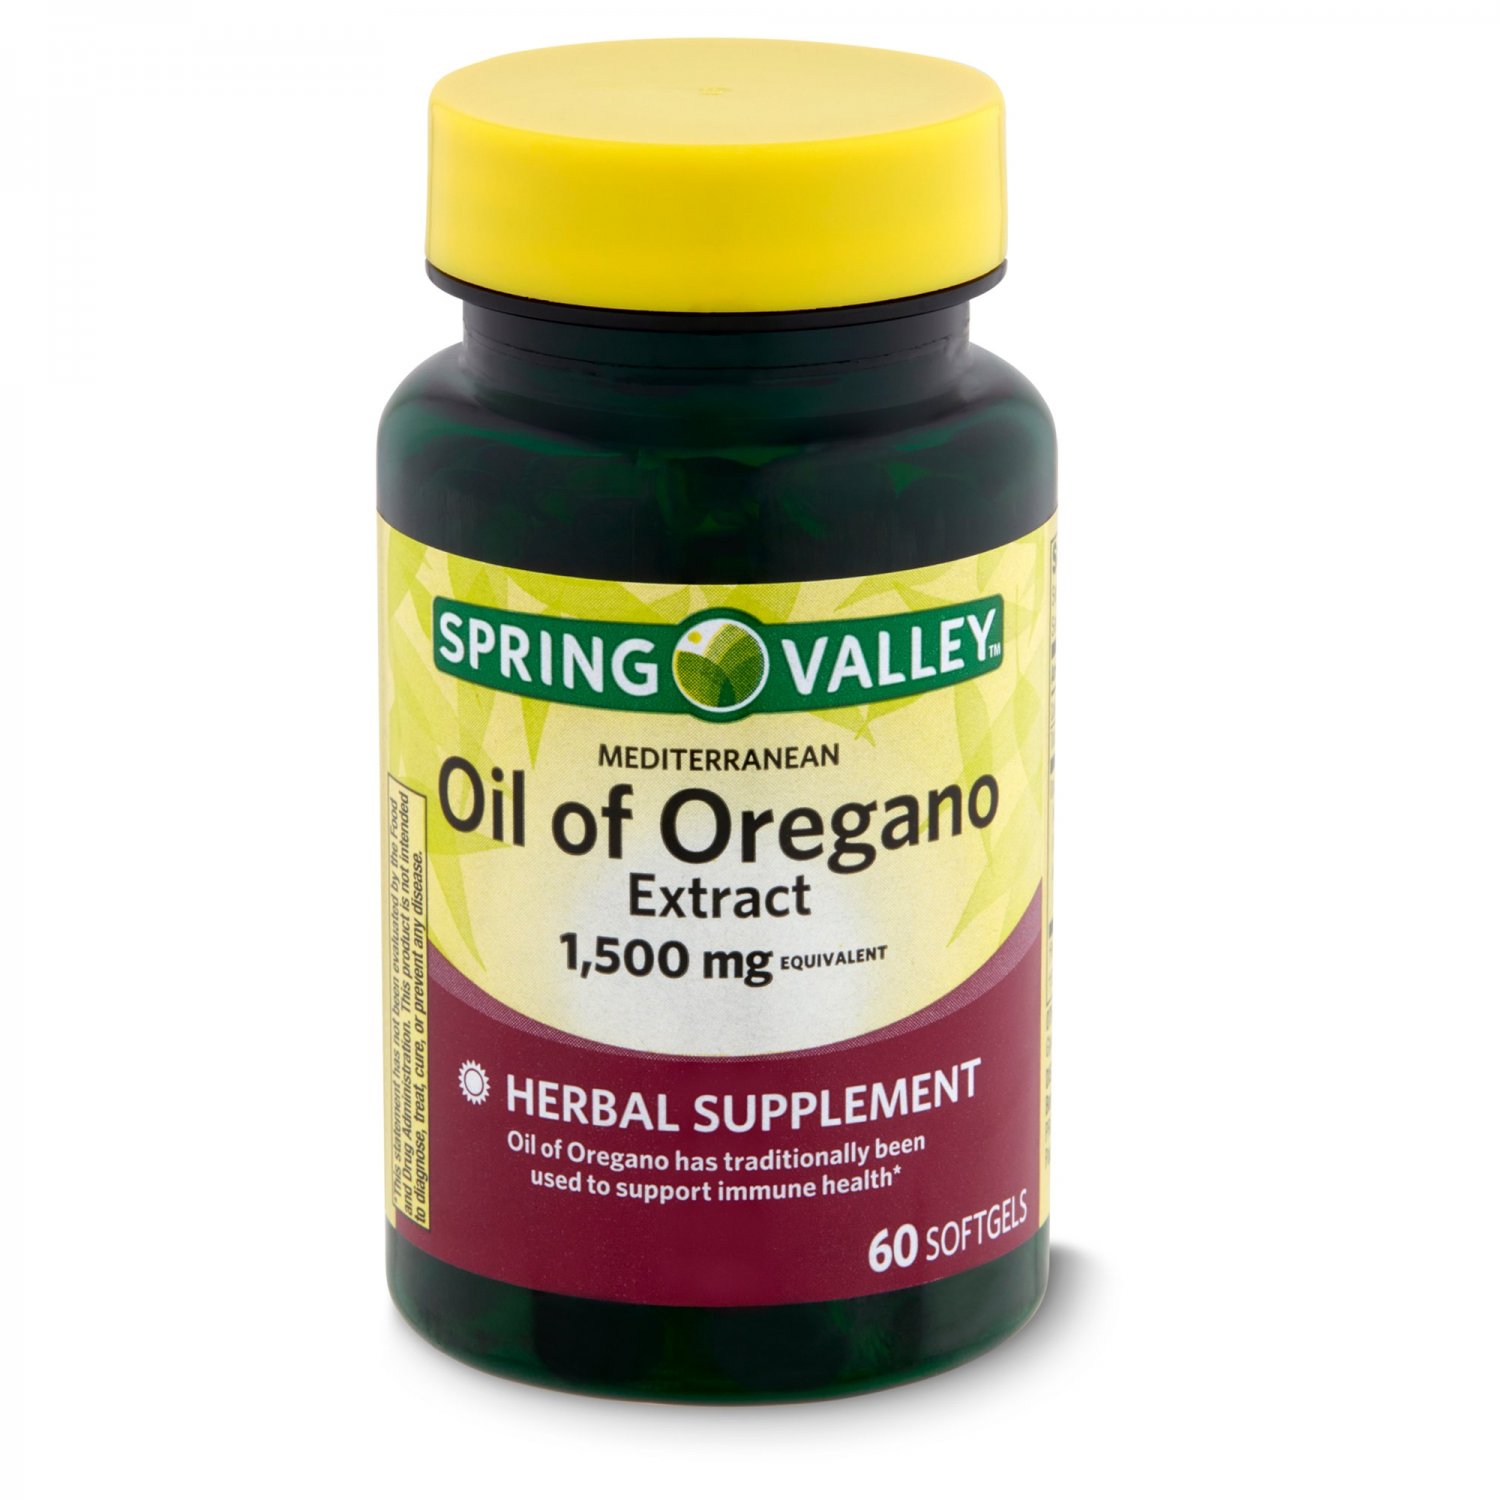 Spring Valley Mediterranean Oil of Oregano Extract 1,500mg 60 Softgels